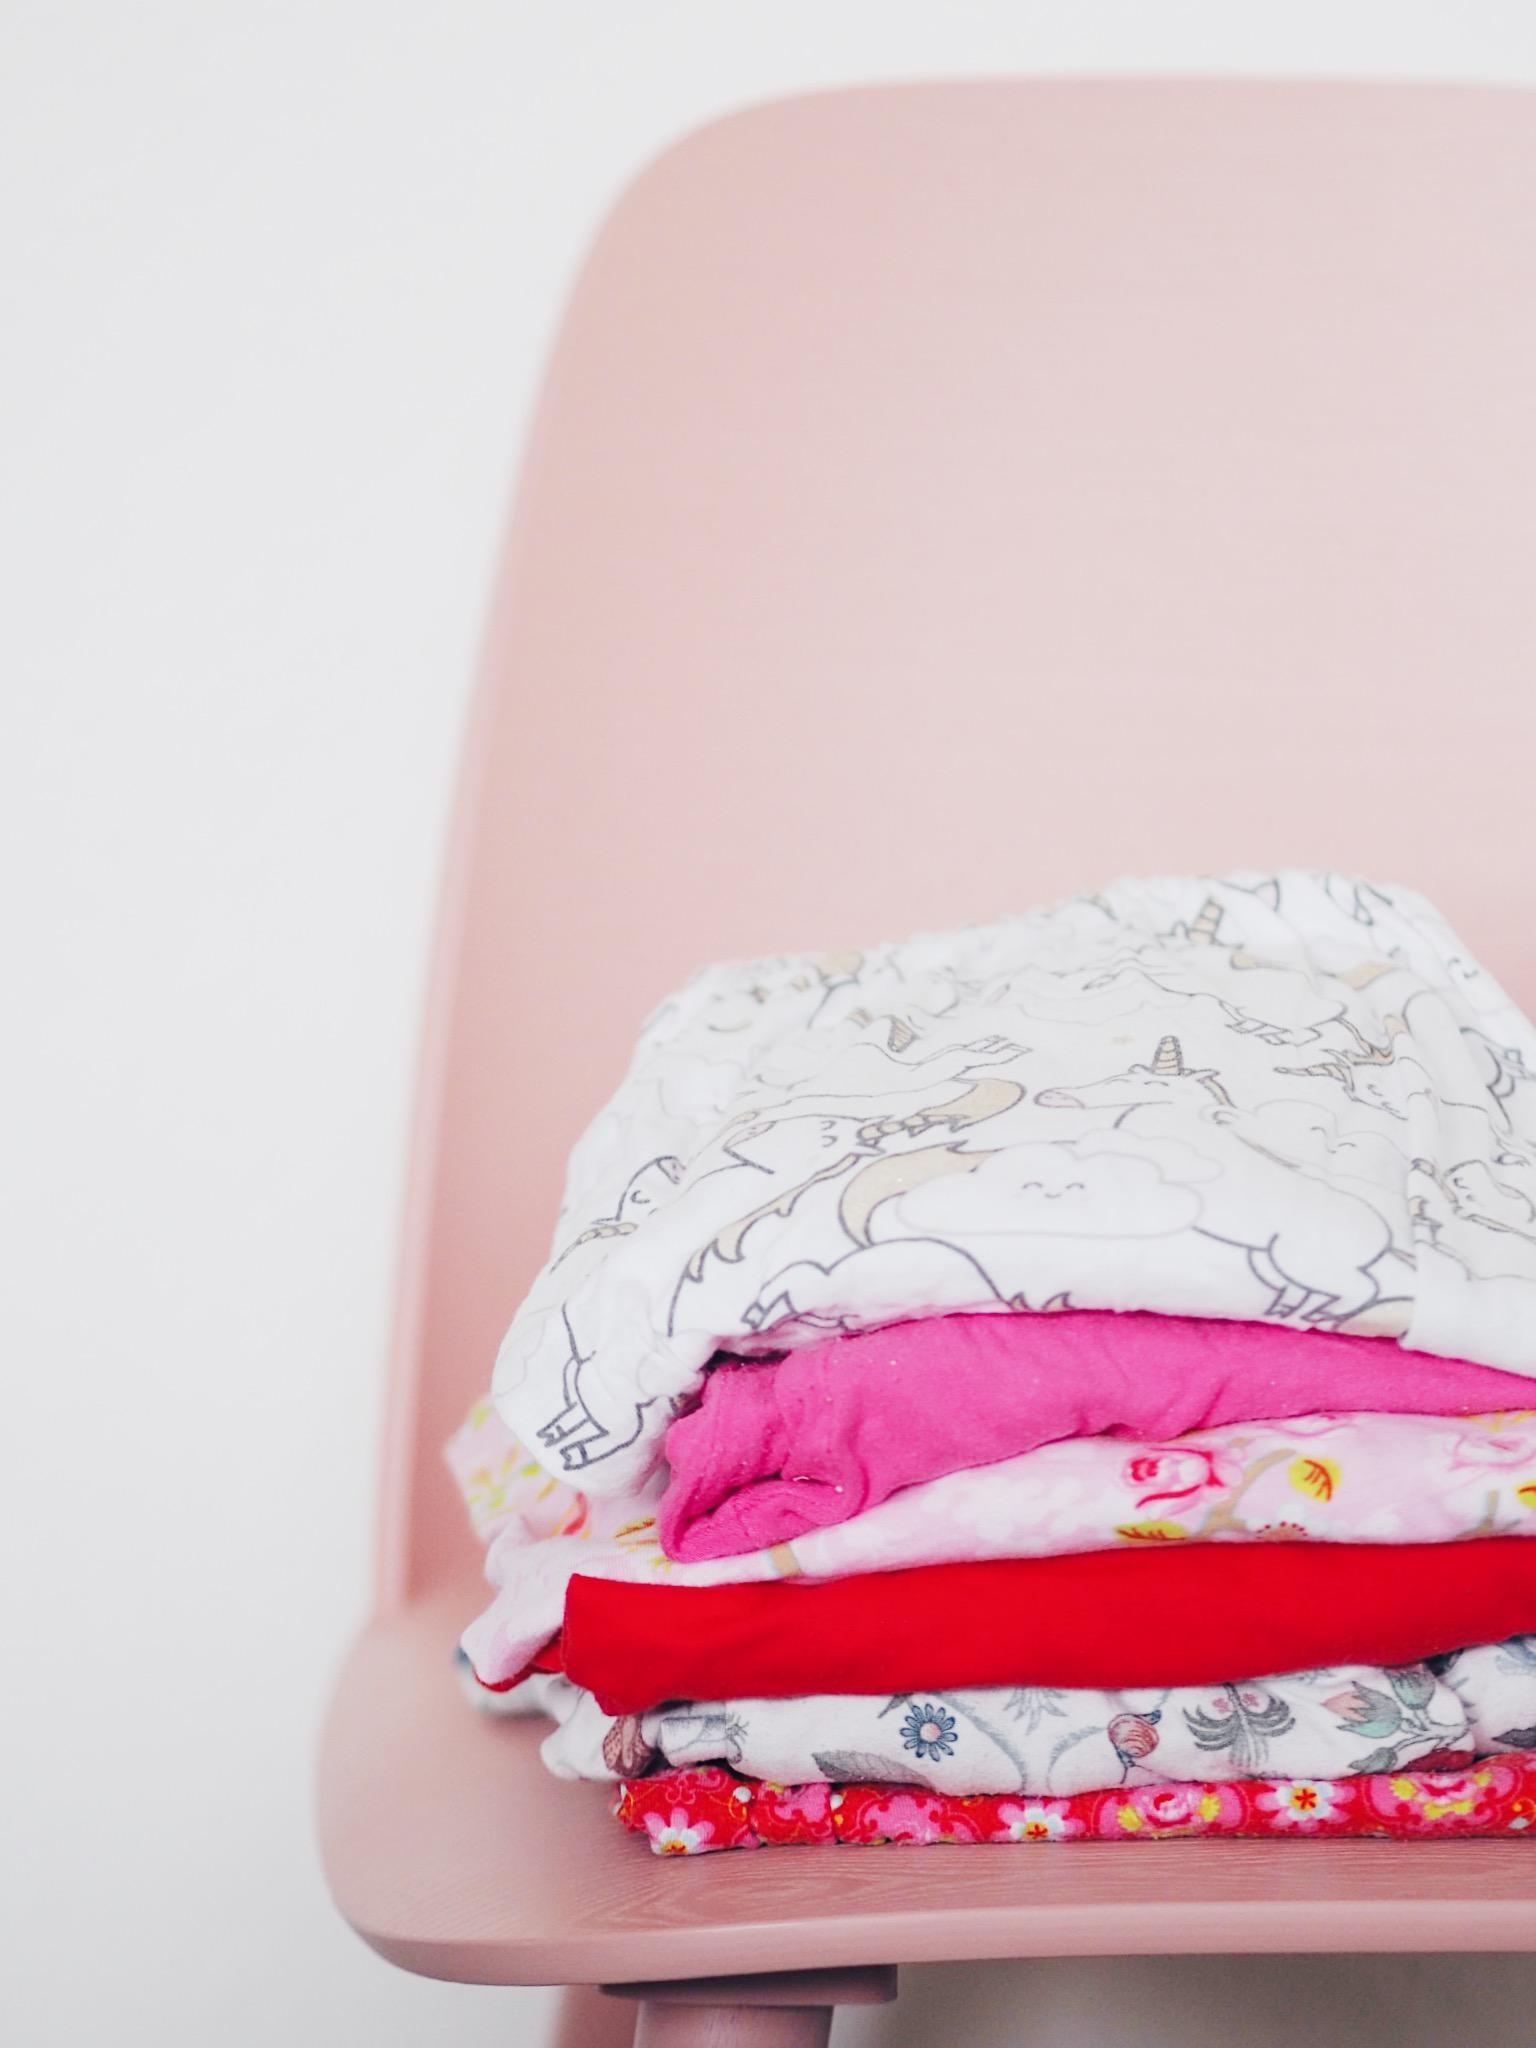 Lieblingsstuhl, Lieblingsfarben und Lieblingsschlafis 💗 #rosarules #pinkismyhappycolour #haydesign #pipstudio